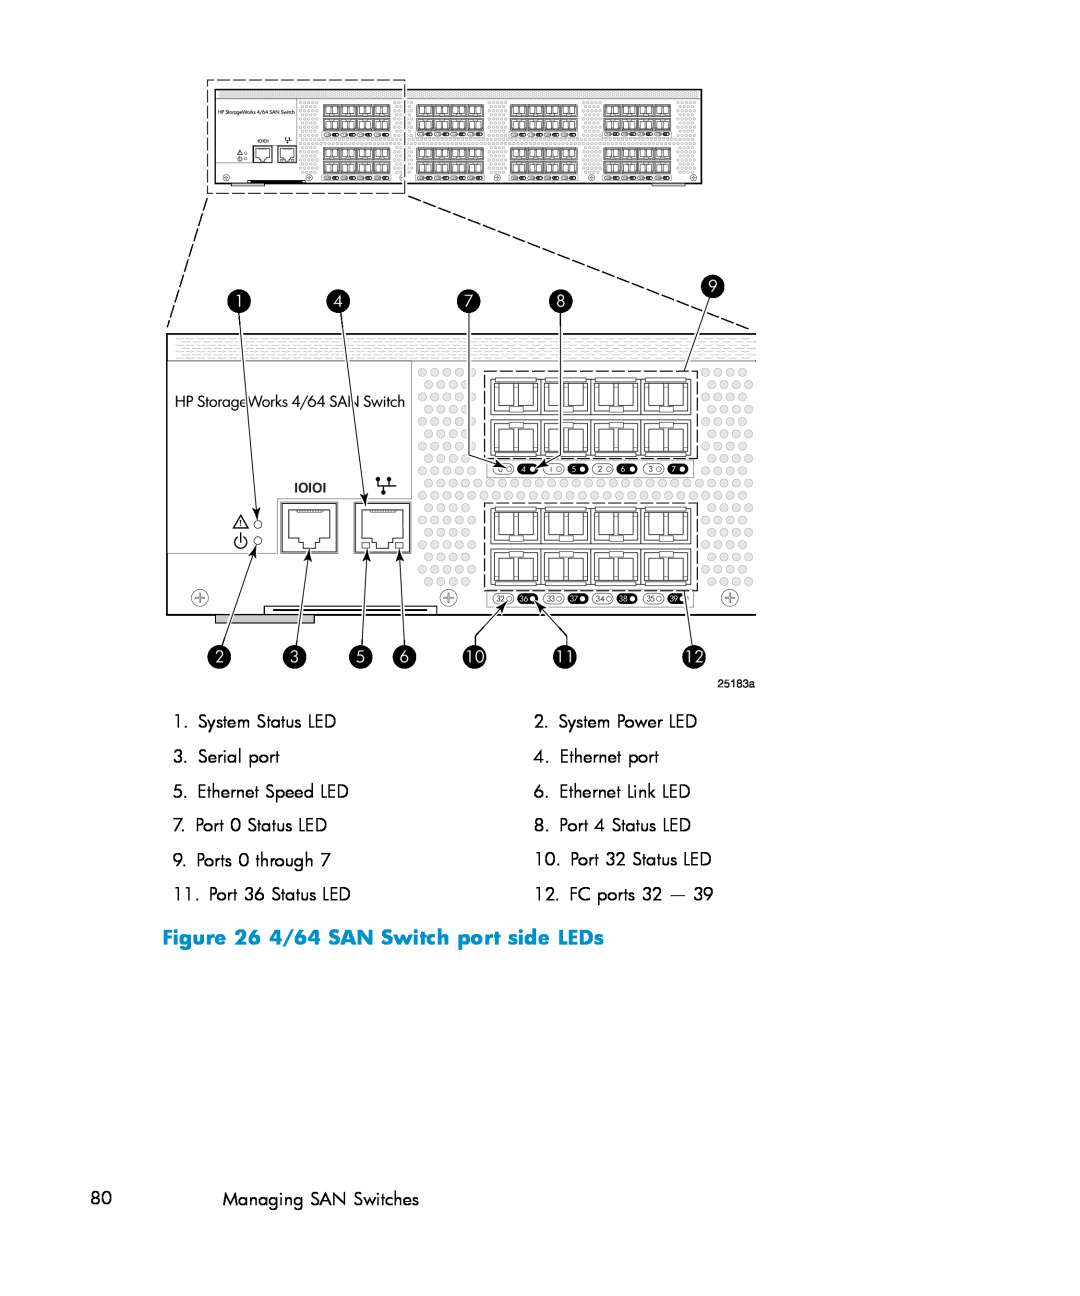 IBM AA-RWF3A-TE manual 4/64 SAN Switch port side LEDs, Ioioi 